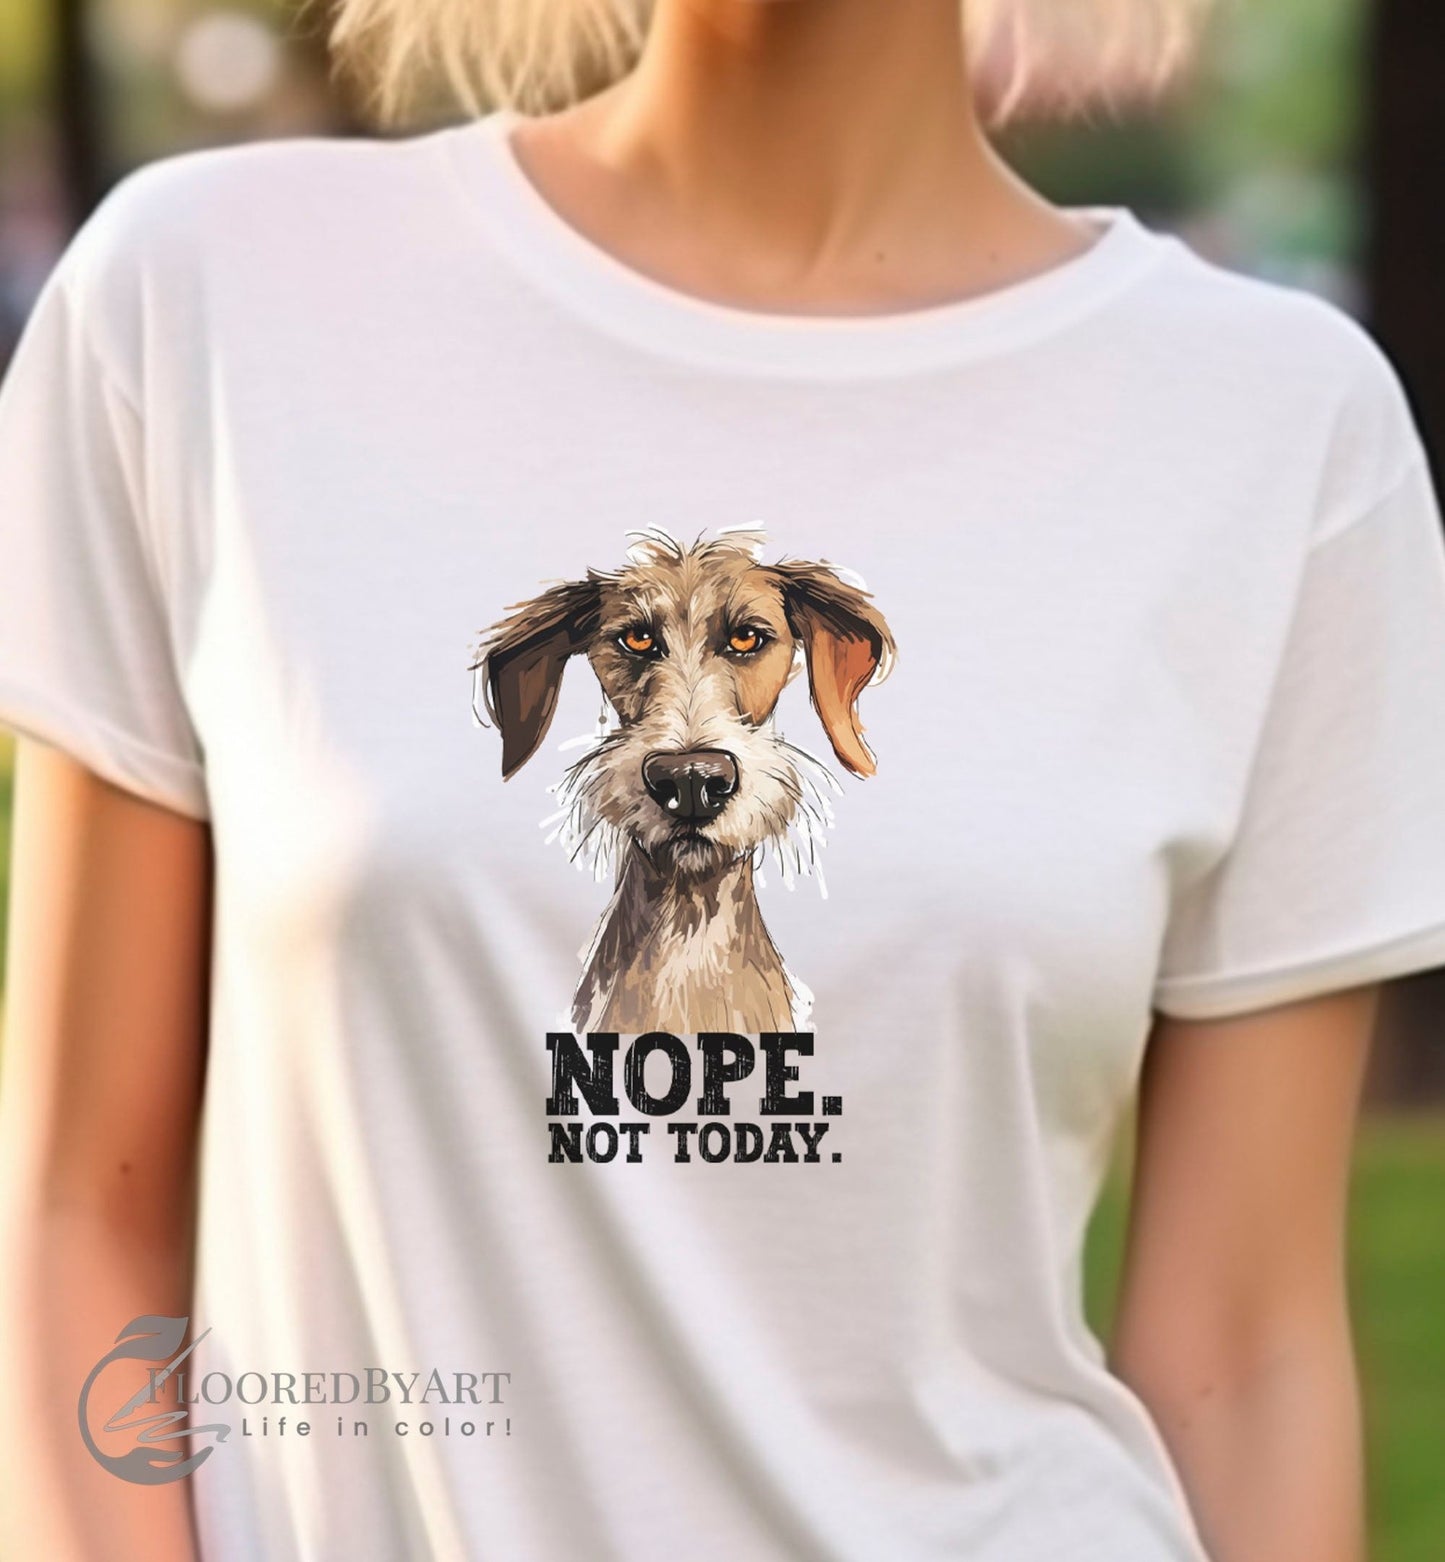 Funny Dog Tshirt - "Nope. Not today" Dog Lovers T-shirt, Funny Cartoon T-shirt - FlooredByArt